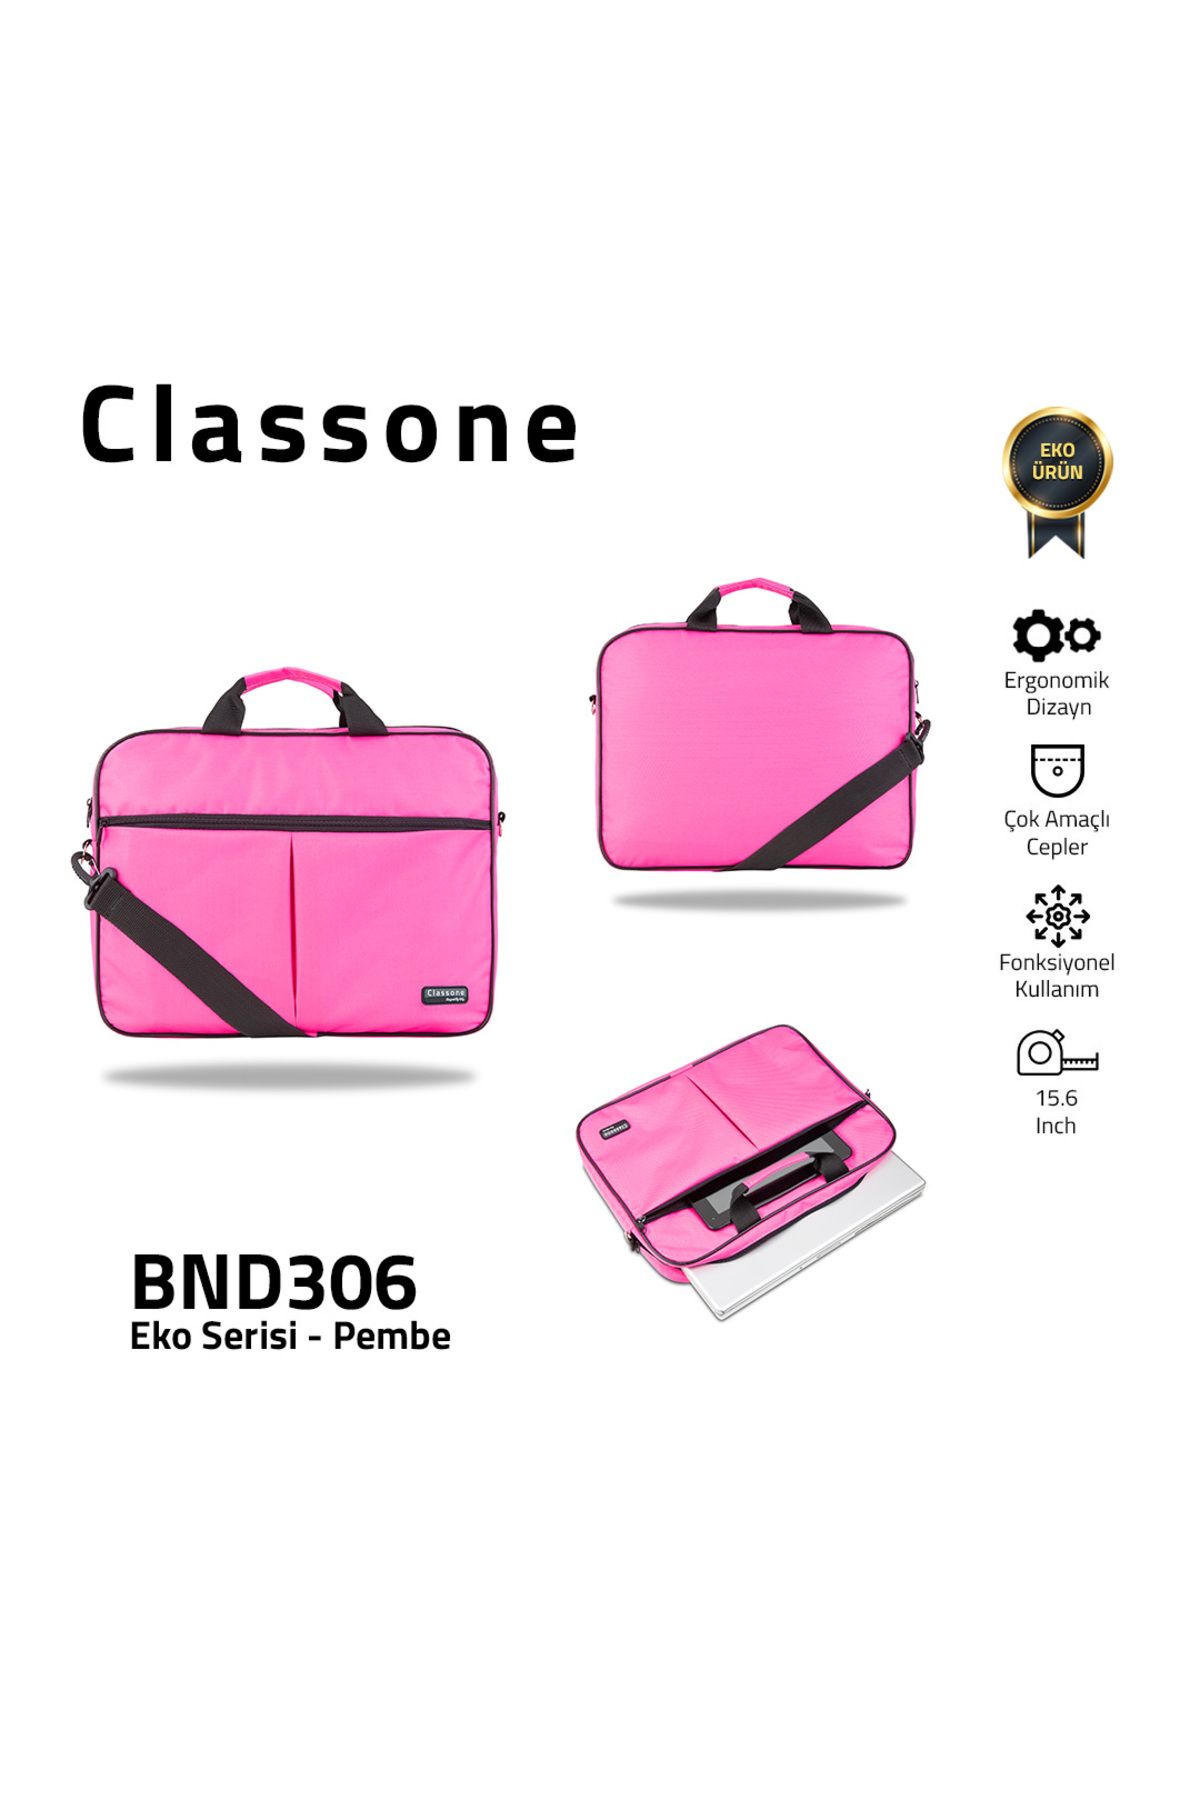 Classone BND306 Eko Serisi -Pembe